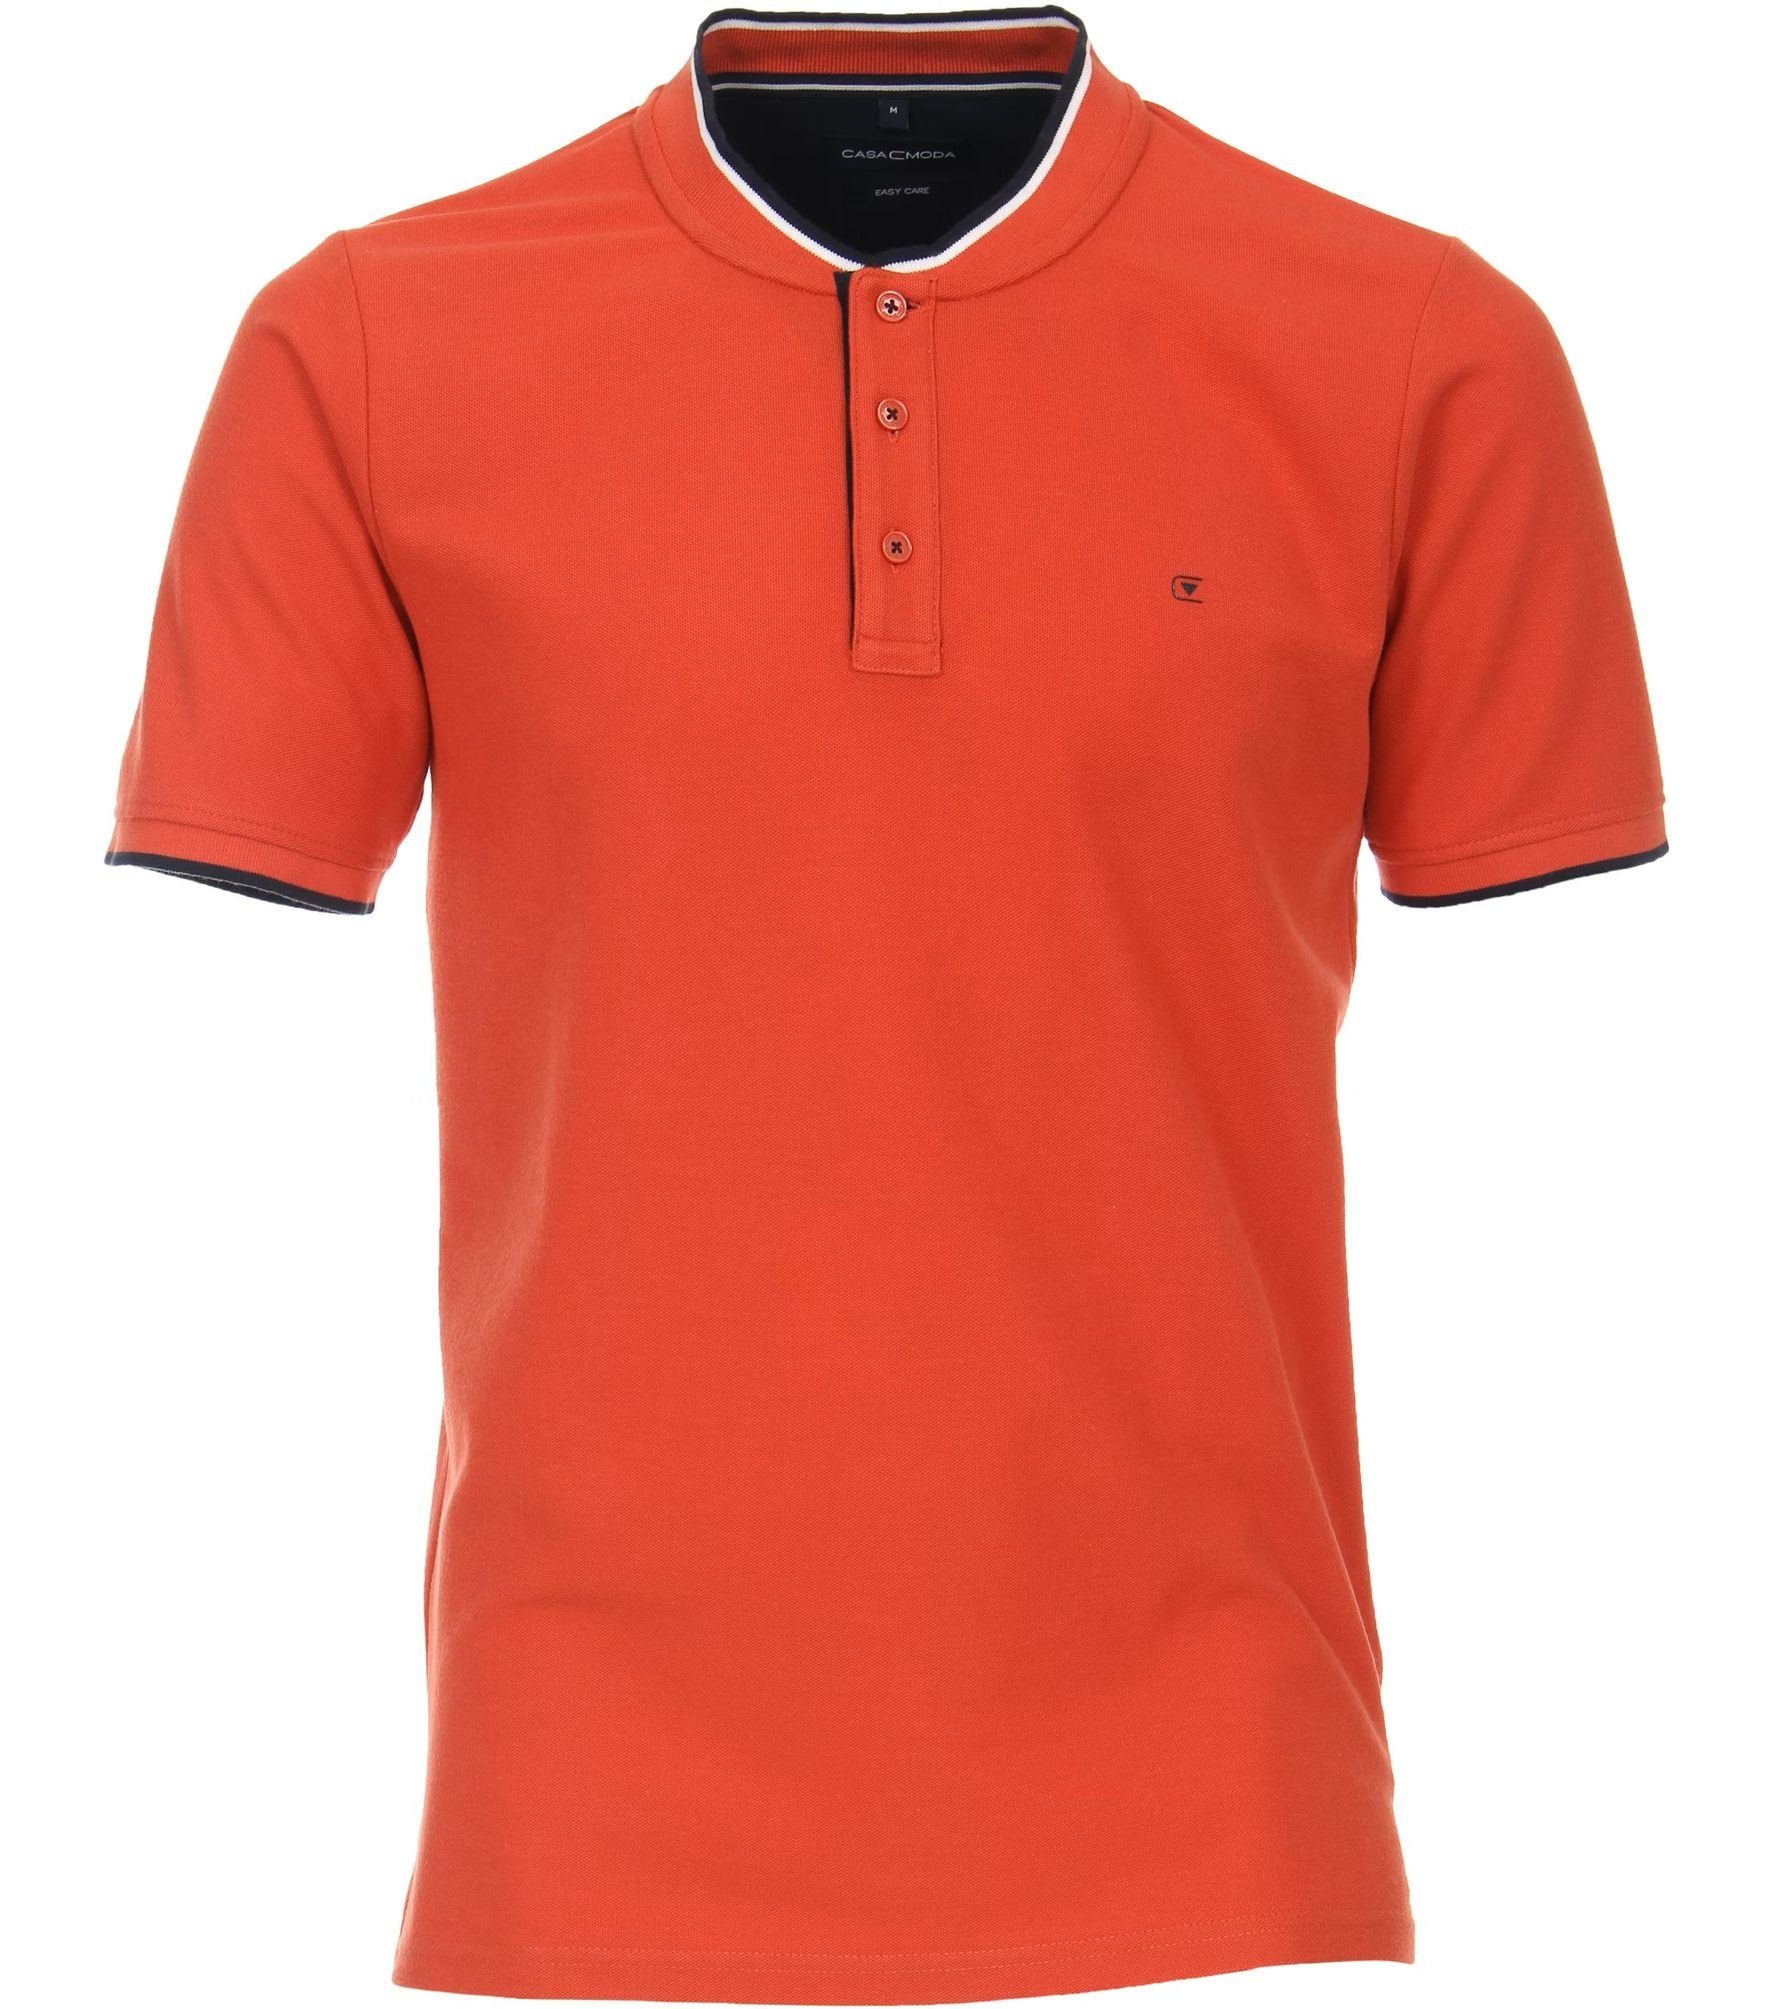 CASAMODA Poloshirt 923877500 orange (466)